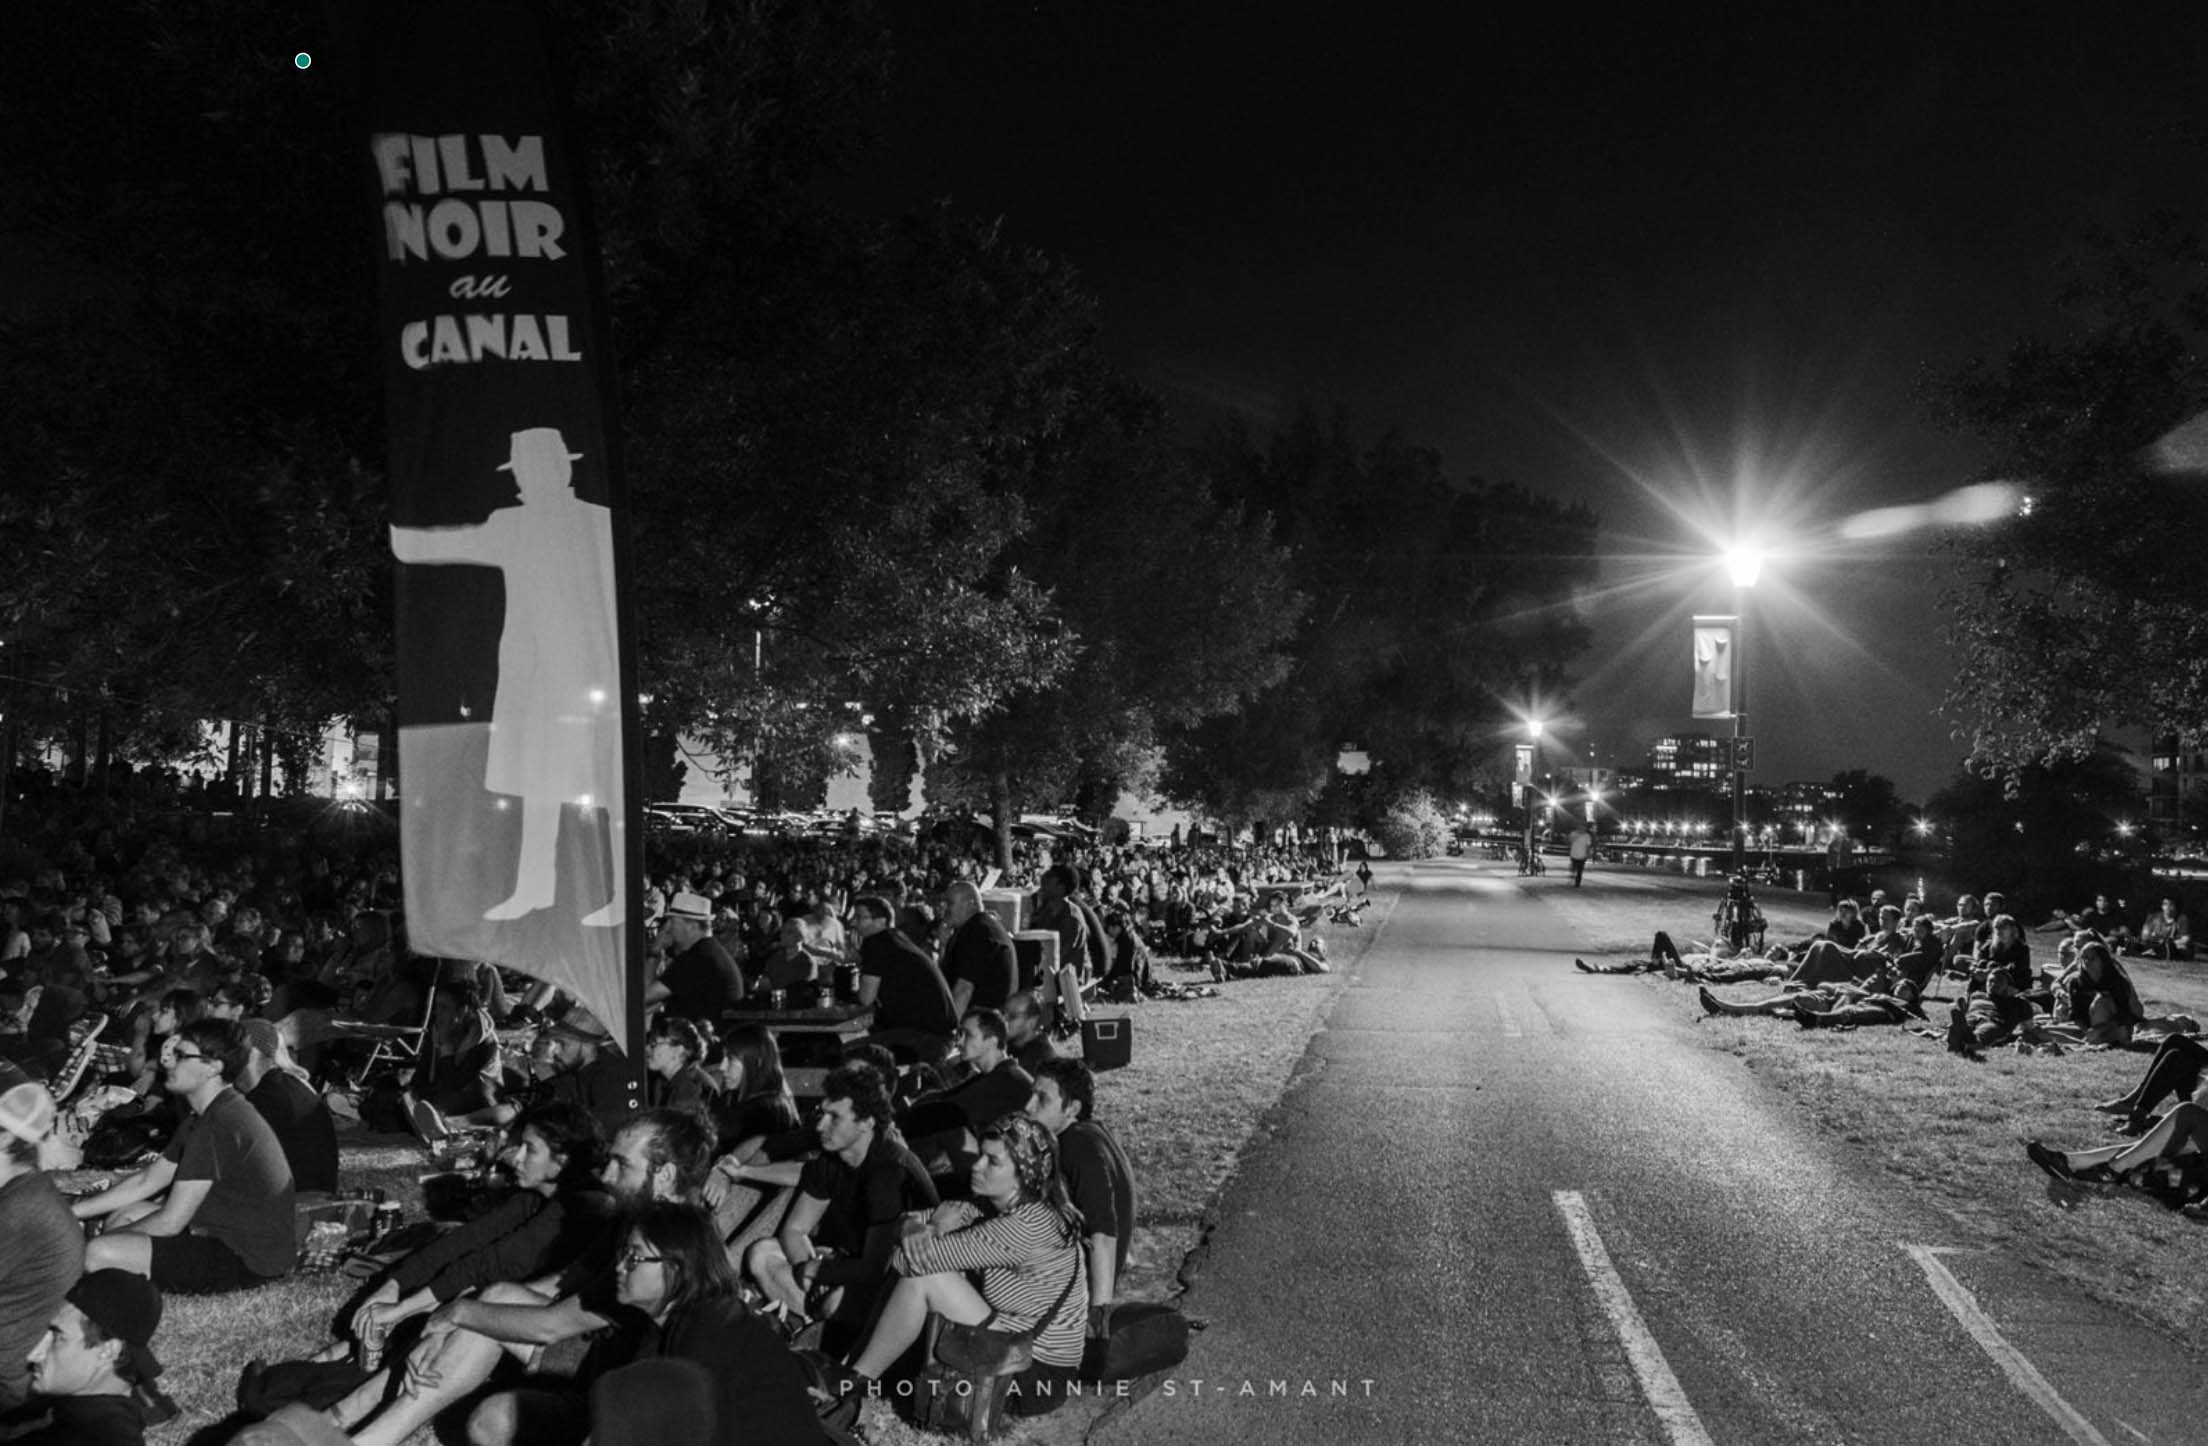 Film Noir au Canal